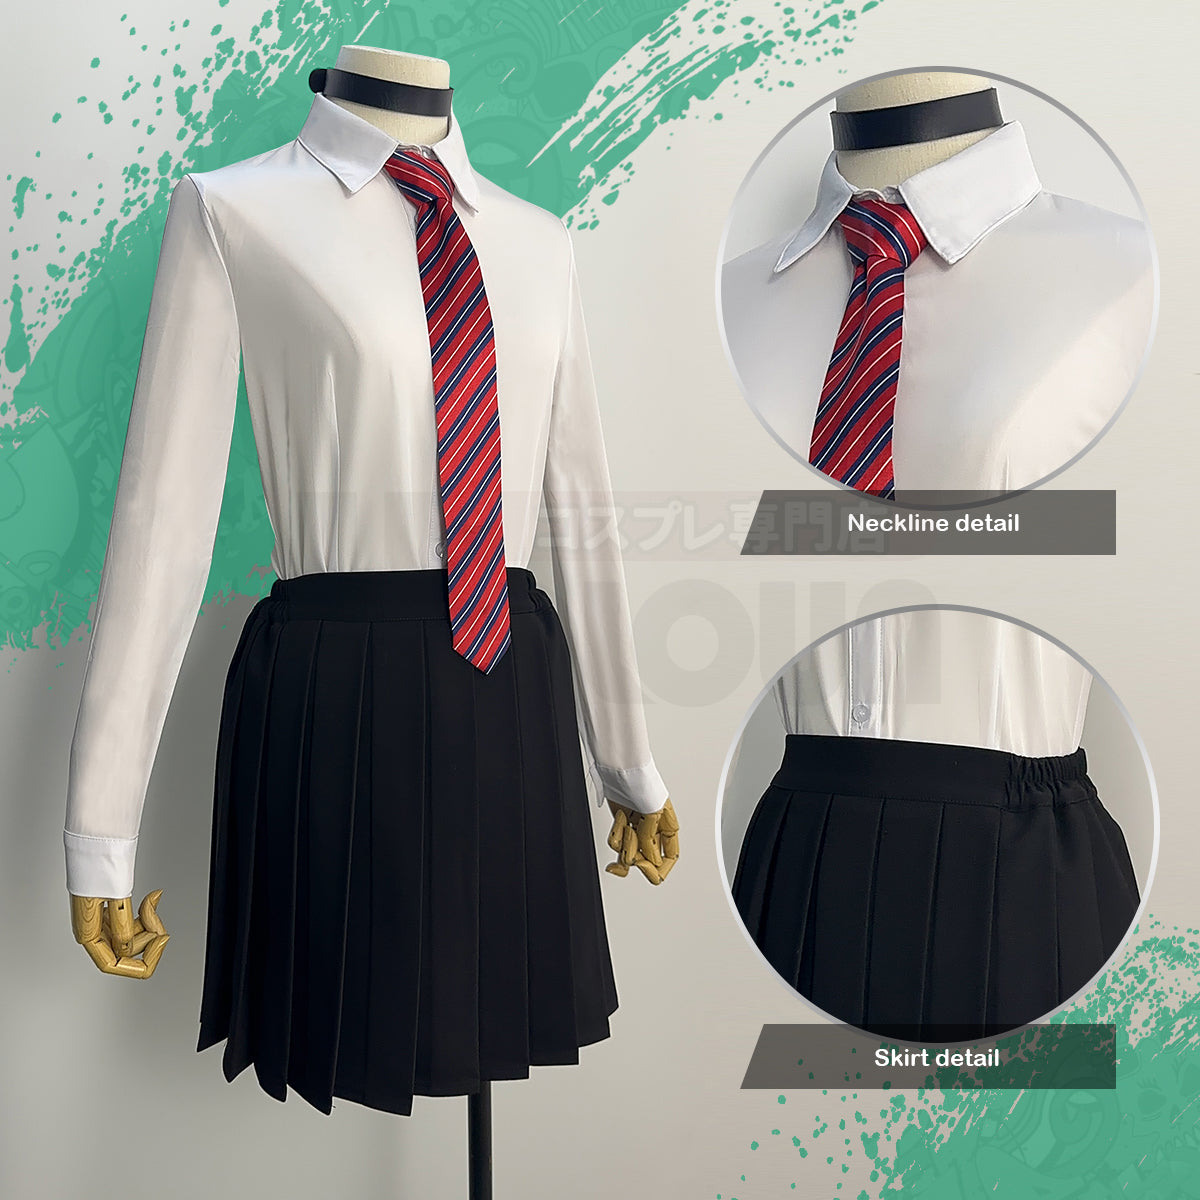 HOLOUN Wind Breaker Anime Tasuku Tsubakino Cosplay Costume Green Long Trench Coat Uniform Skirt White Shirt Choker Tie Bow-knot